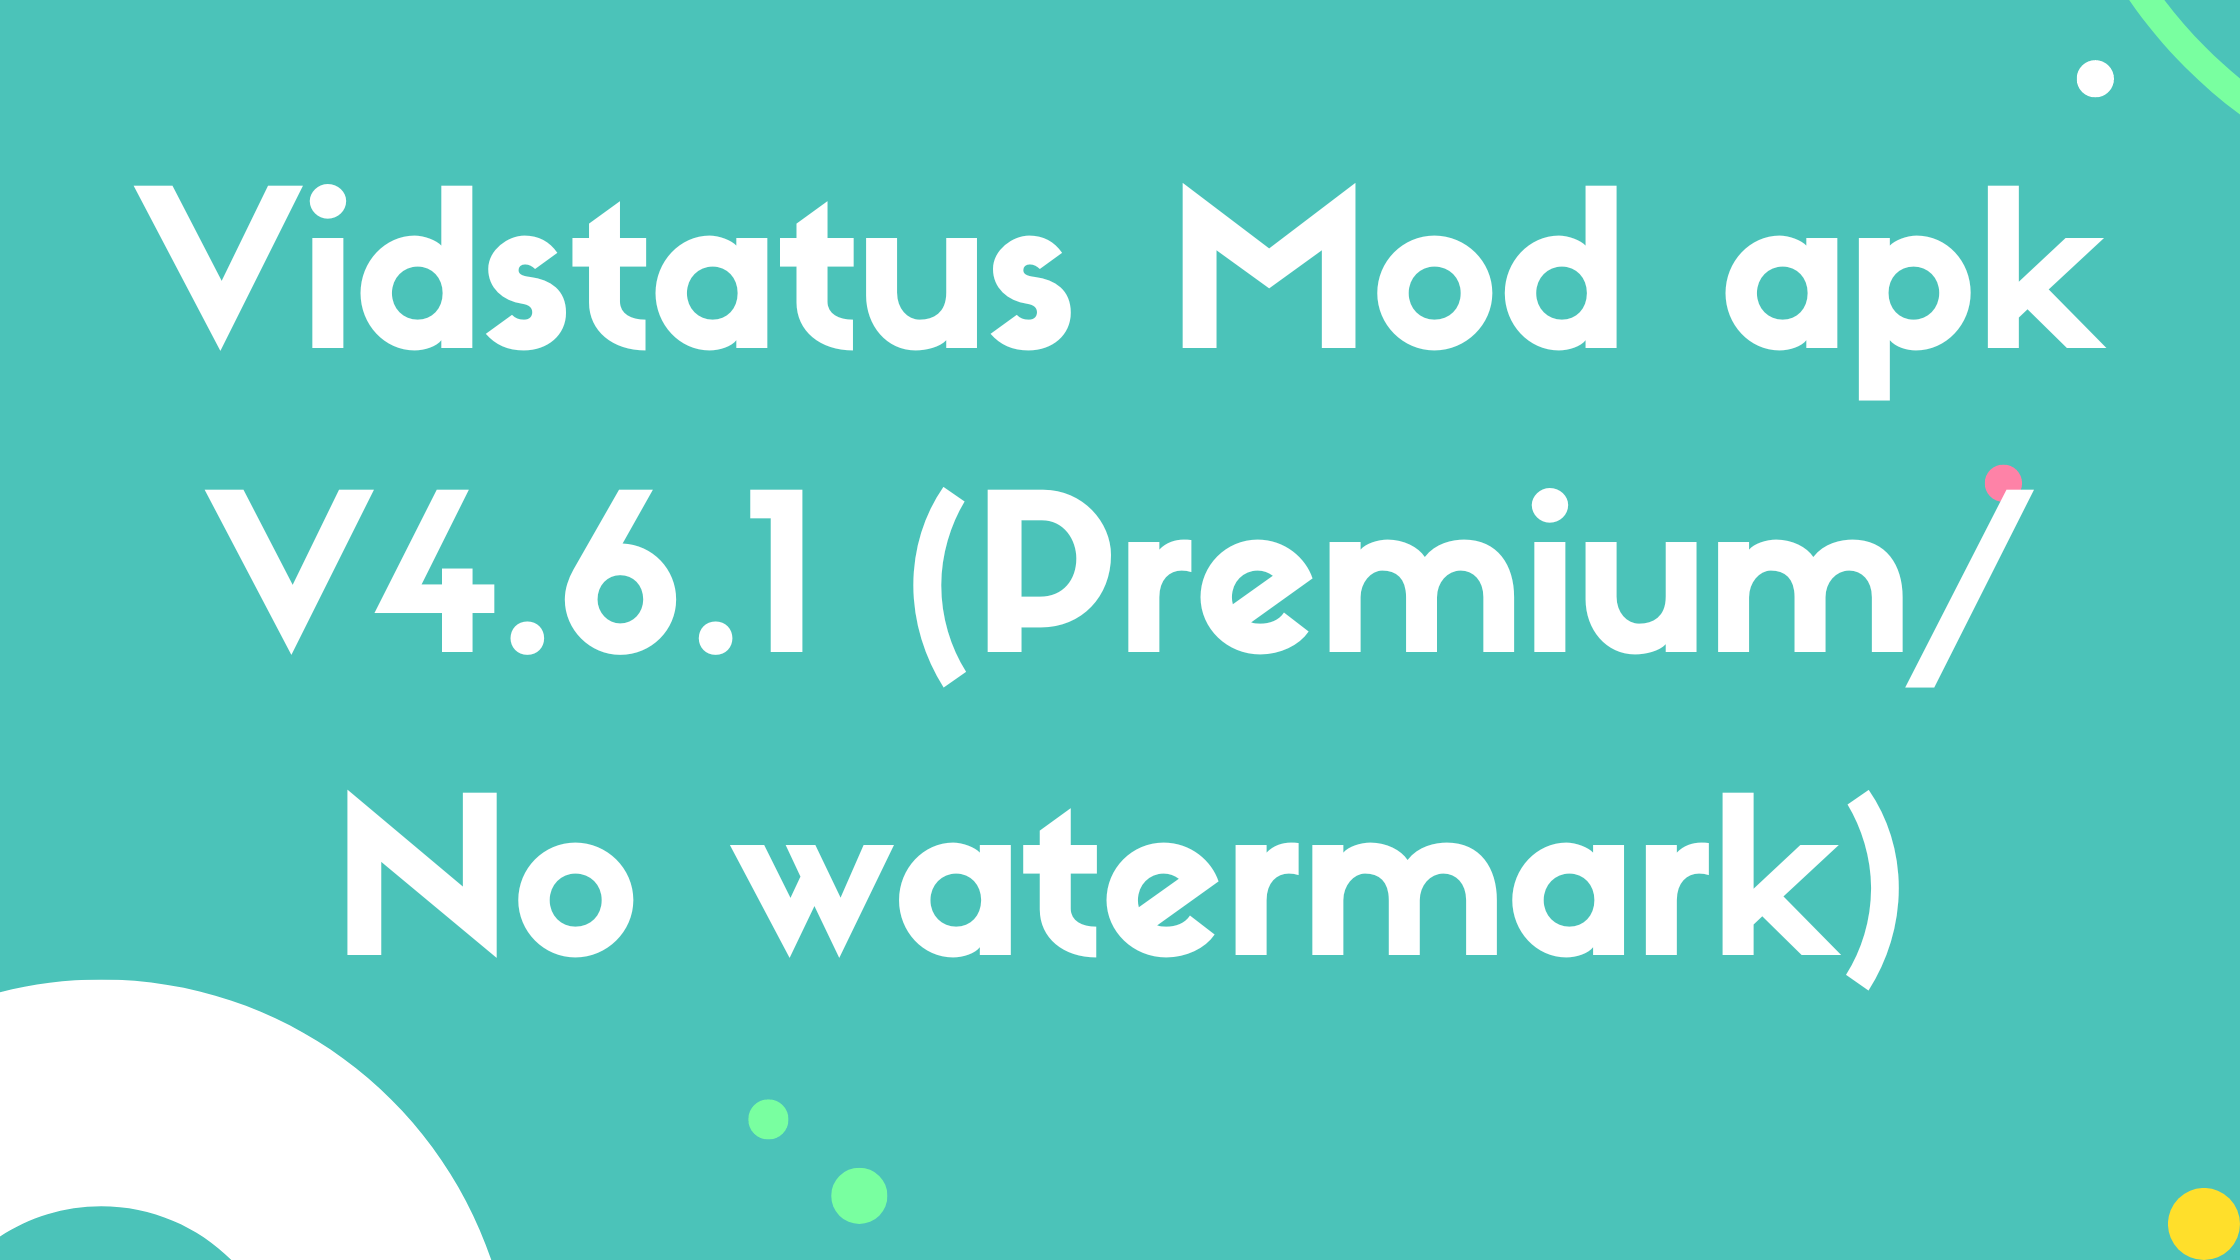 Vidstatus Mod apk V4.6.1 (Premium/ No watermark)